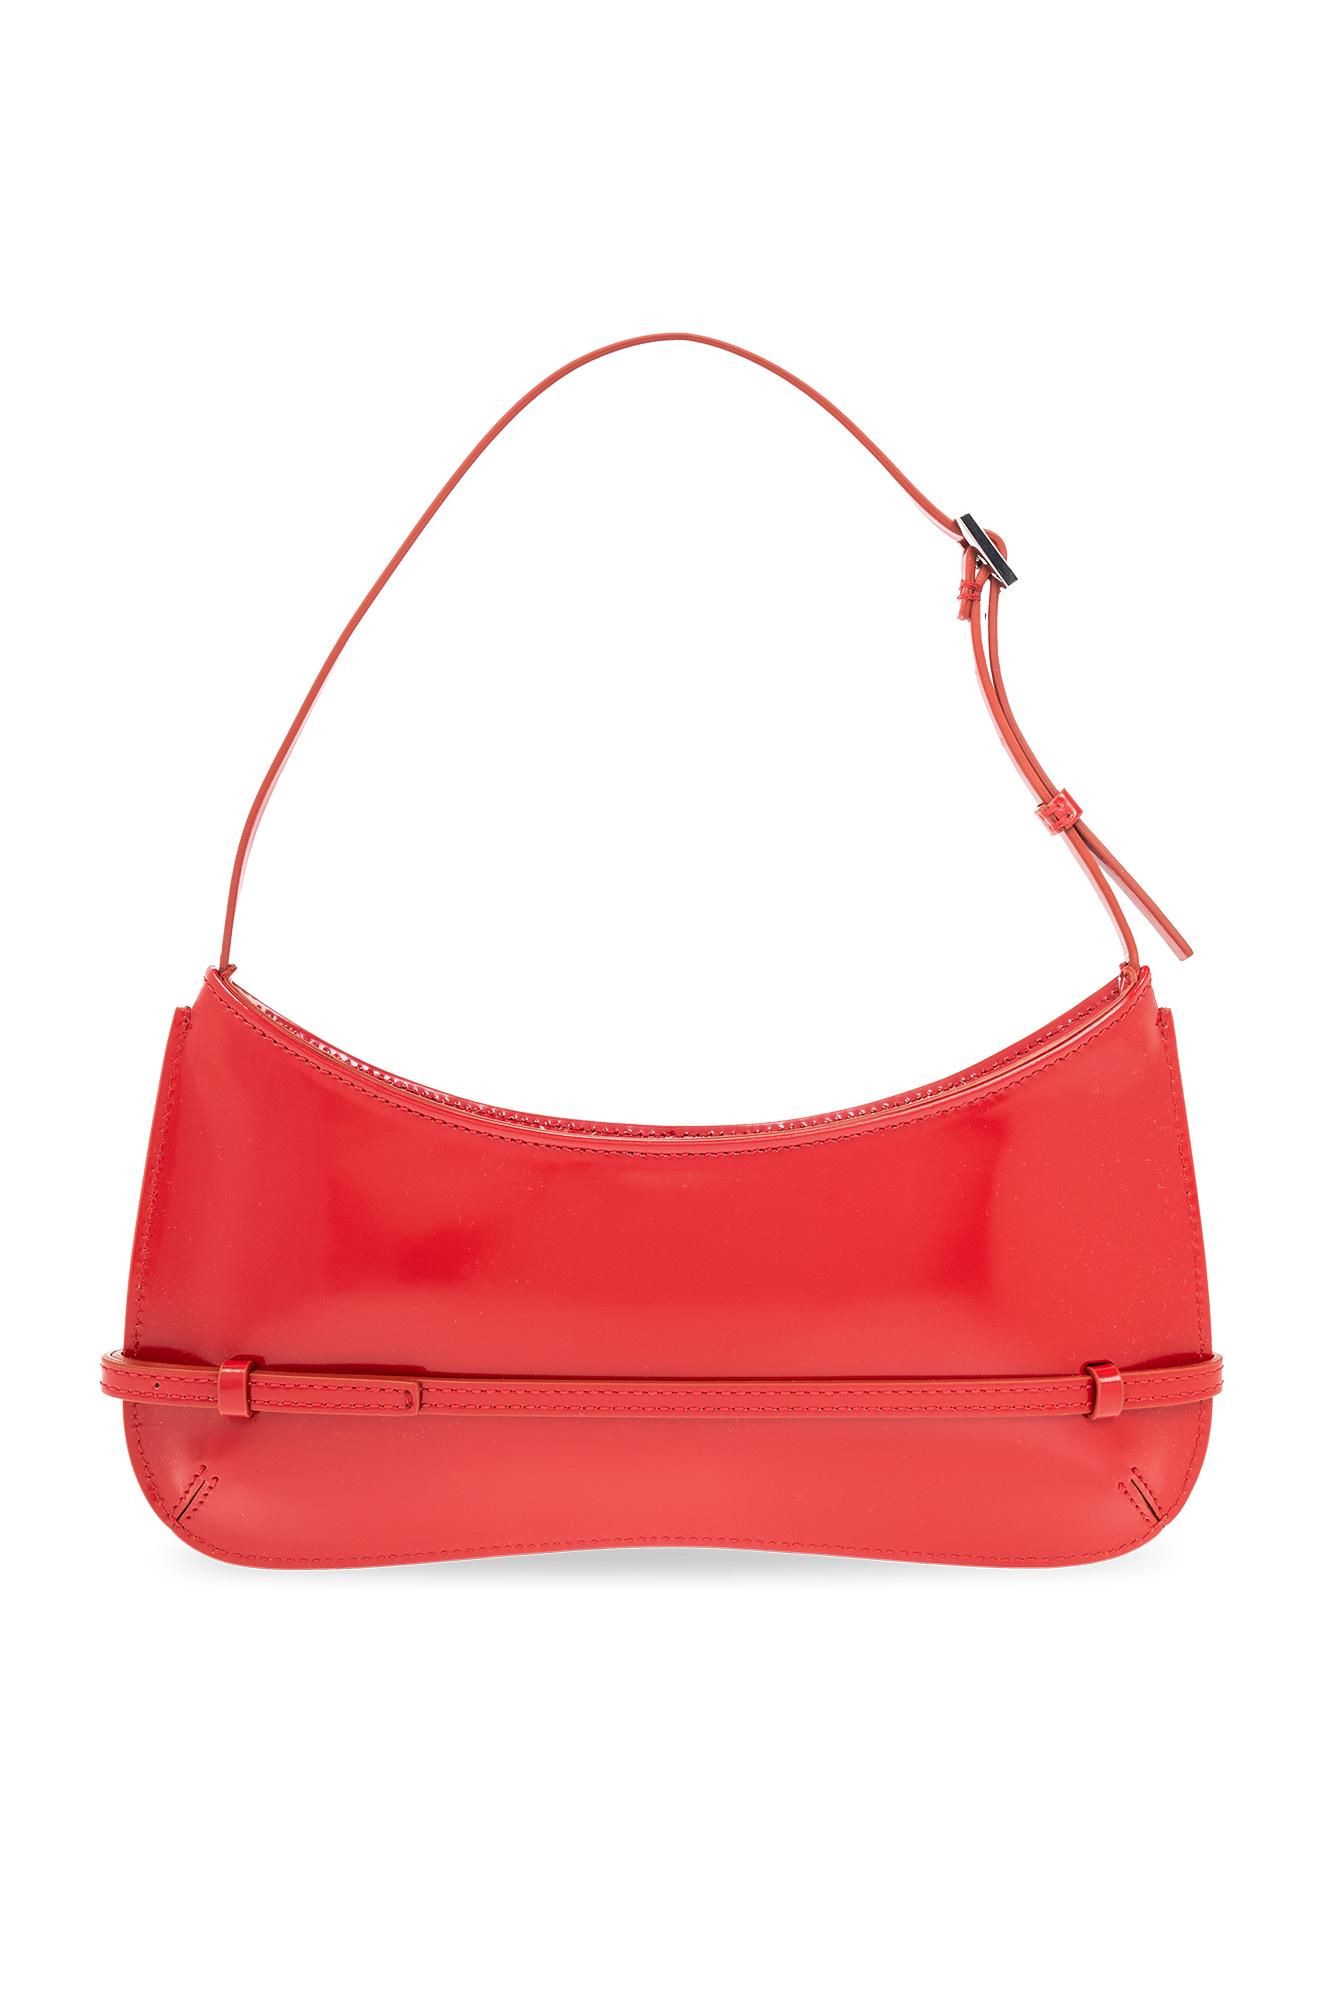 Jacquemus 'le Bisou Ceinture' Handbag in Red | Lyst